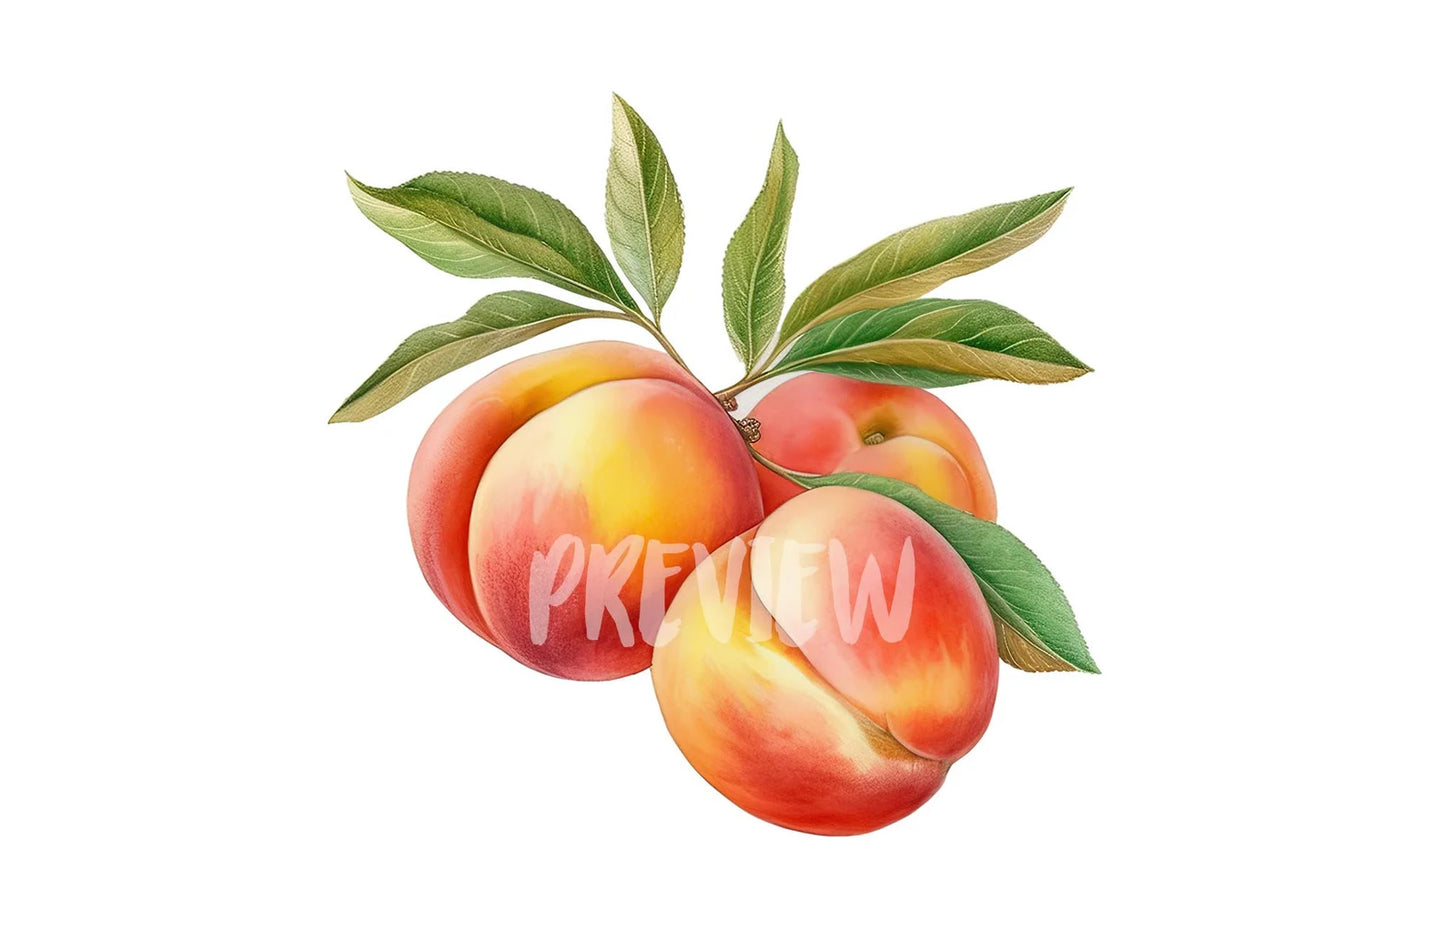 Watercolor Peaches Clipart